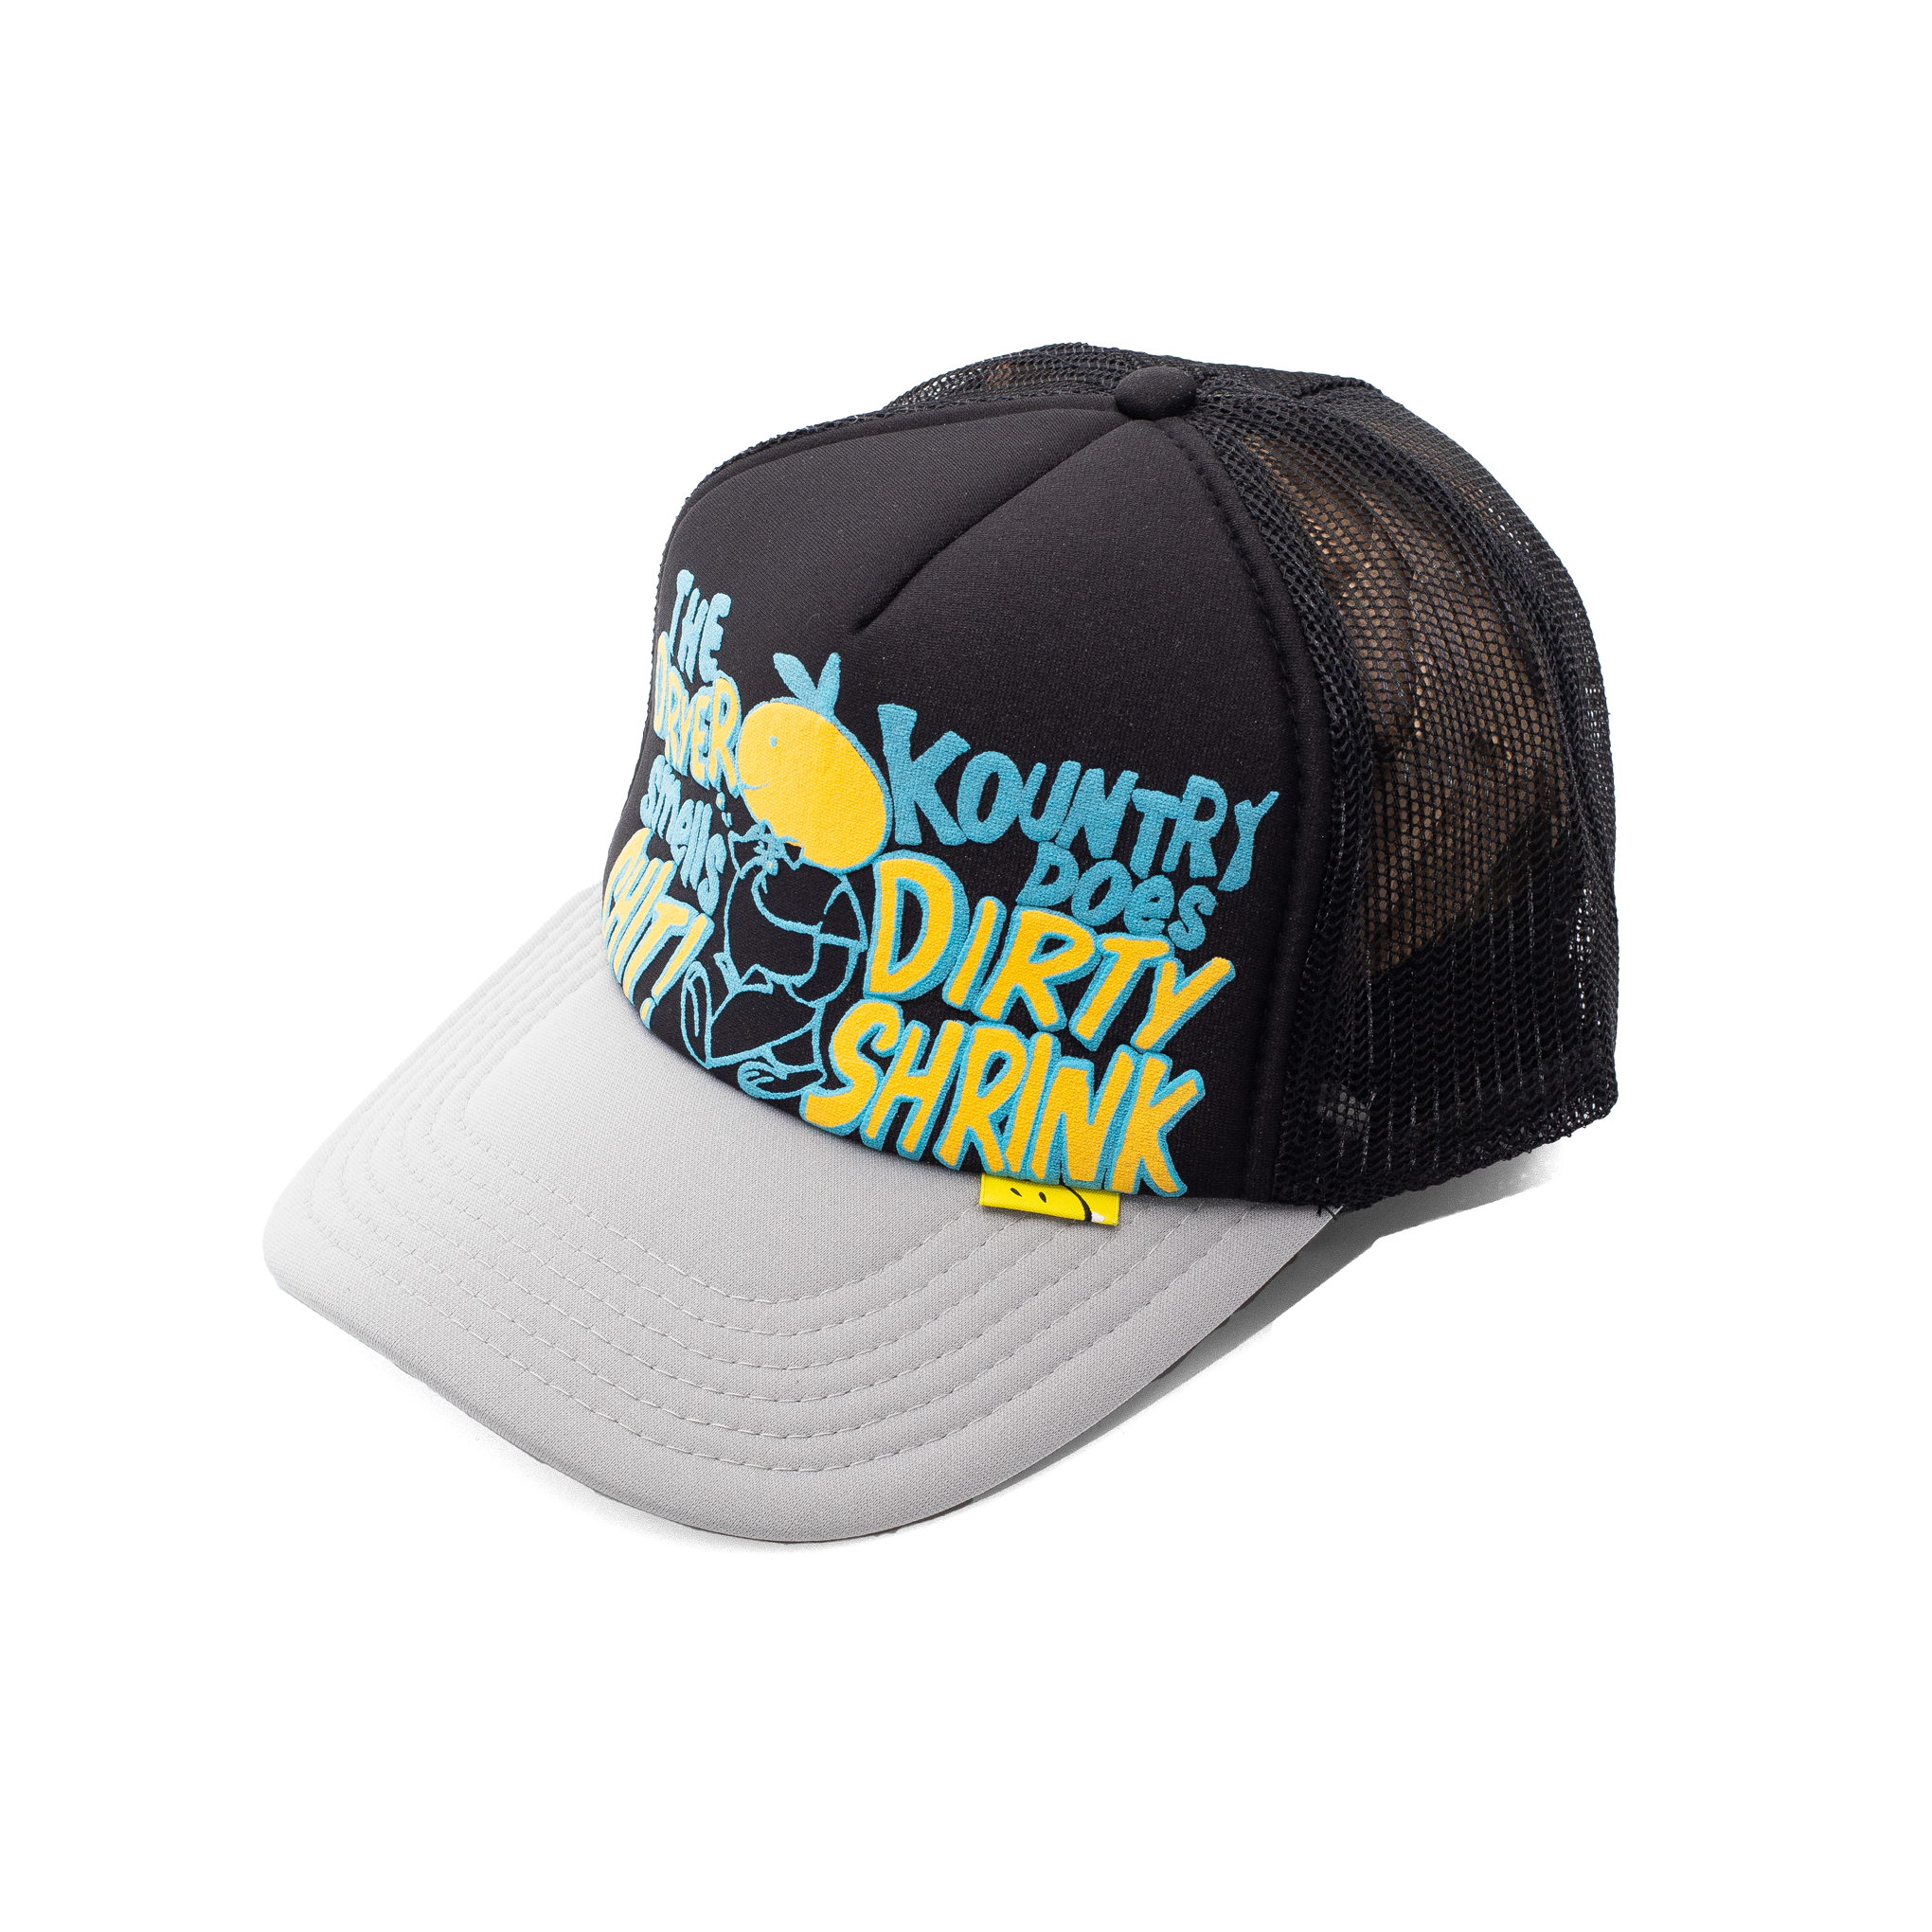 KAPITAL KOUNTRY DIRTY SHRINK TRUCKER HAT BLACK/GREY